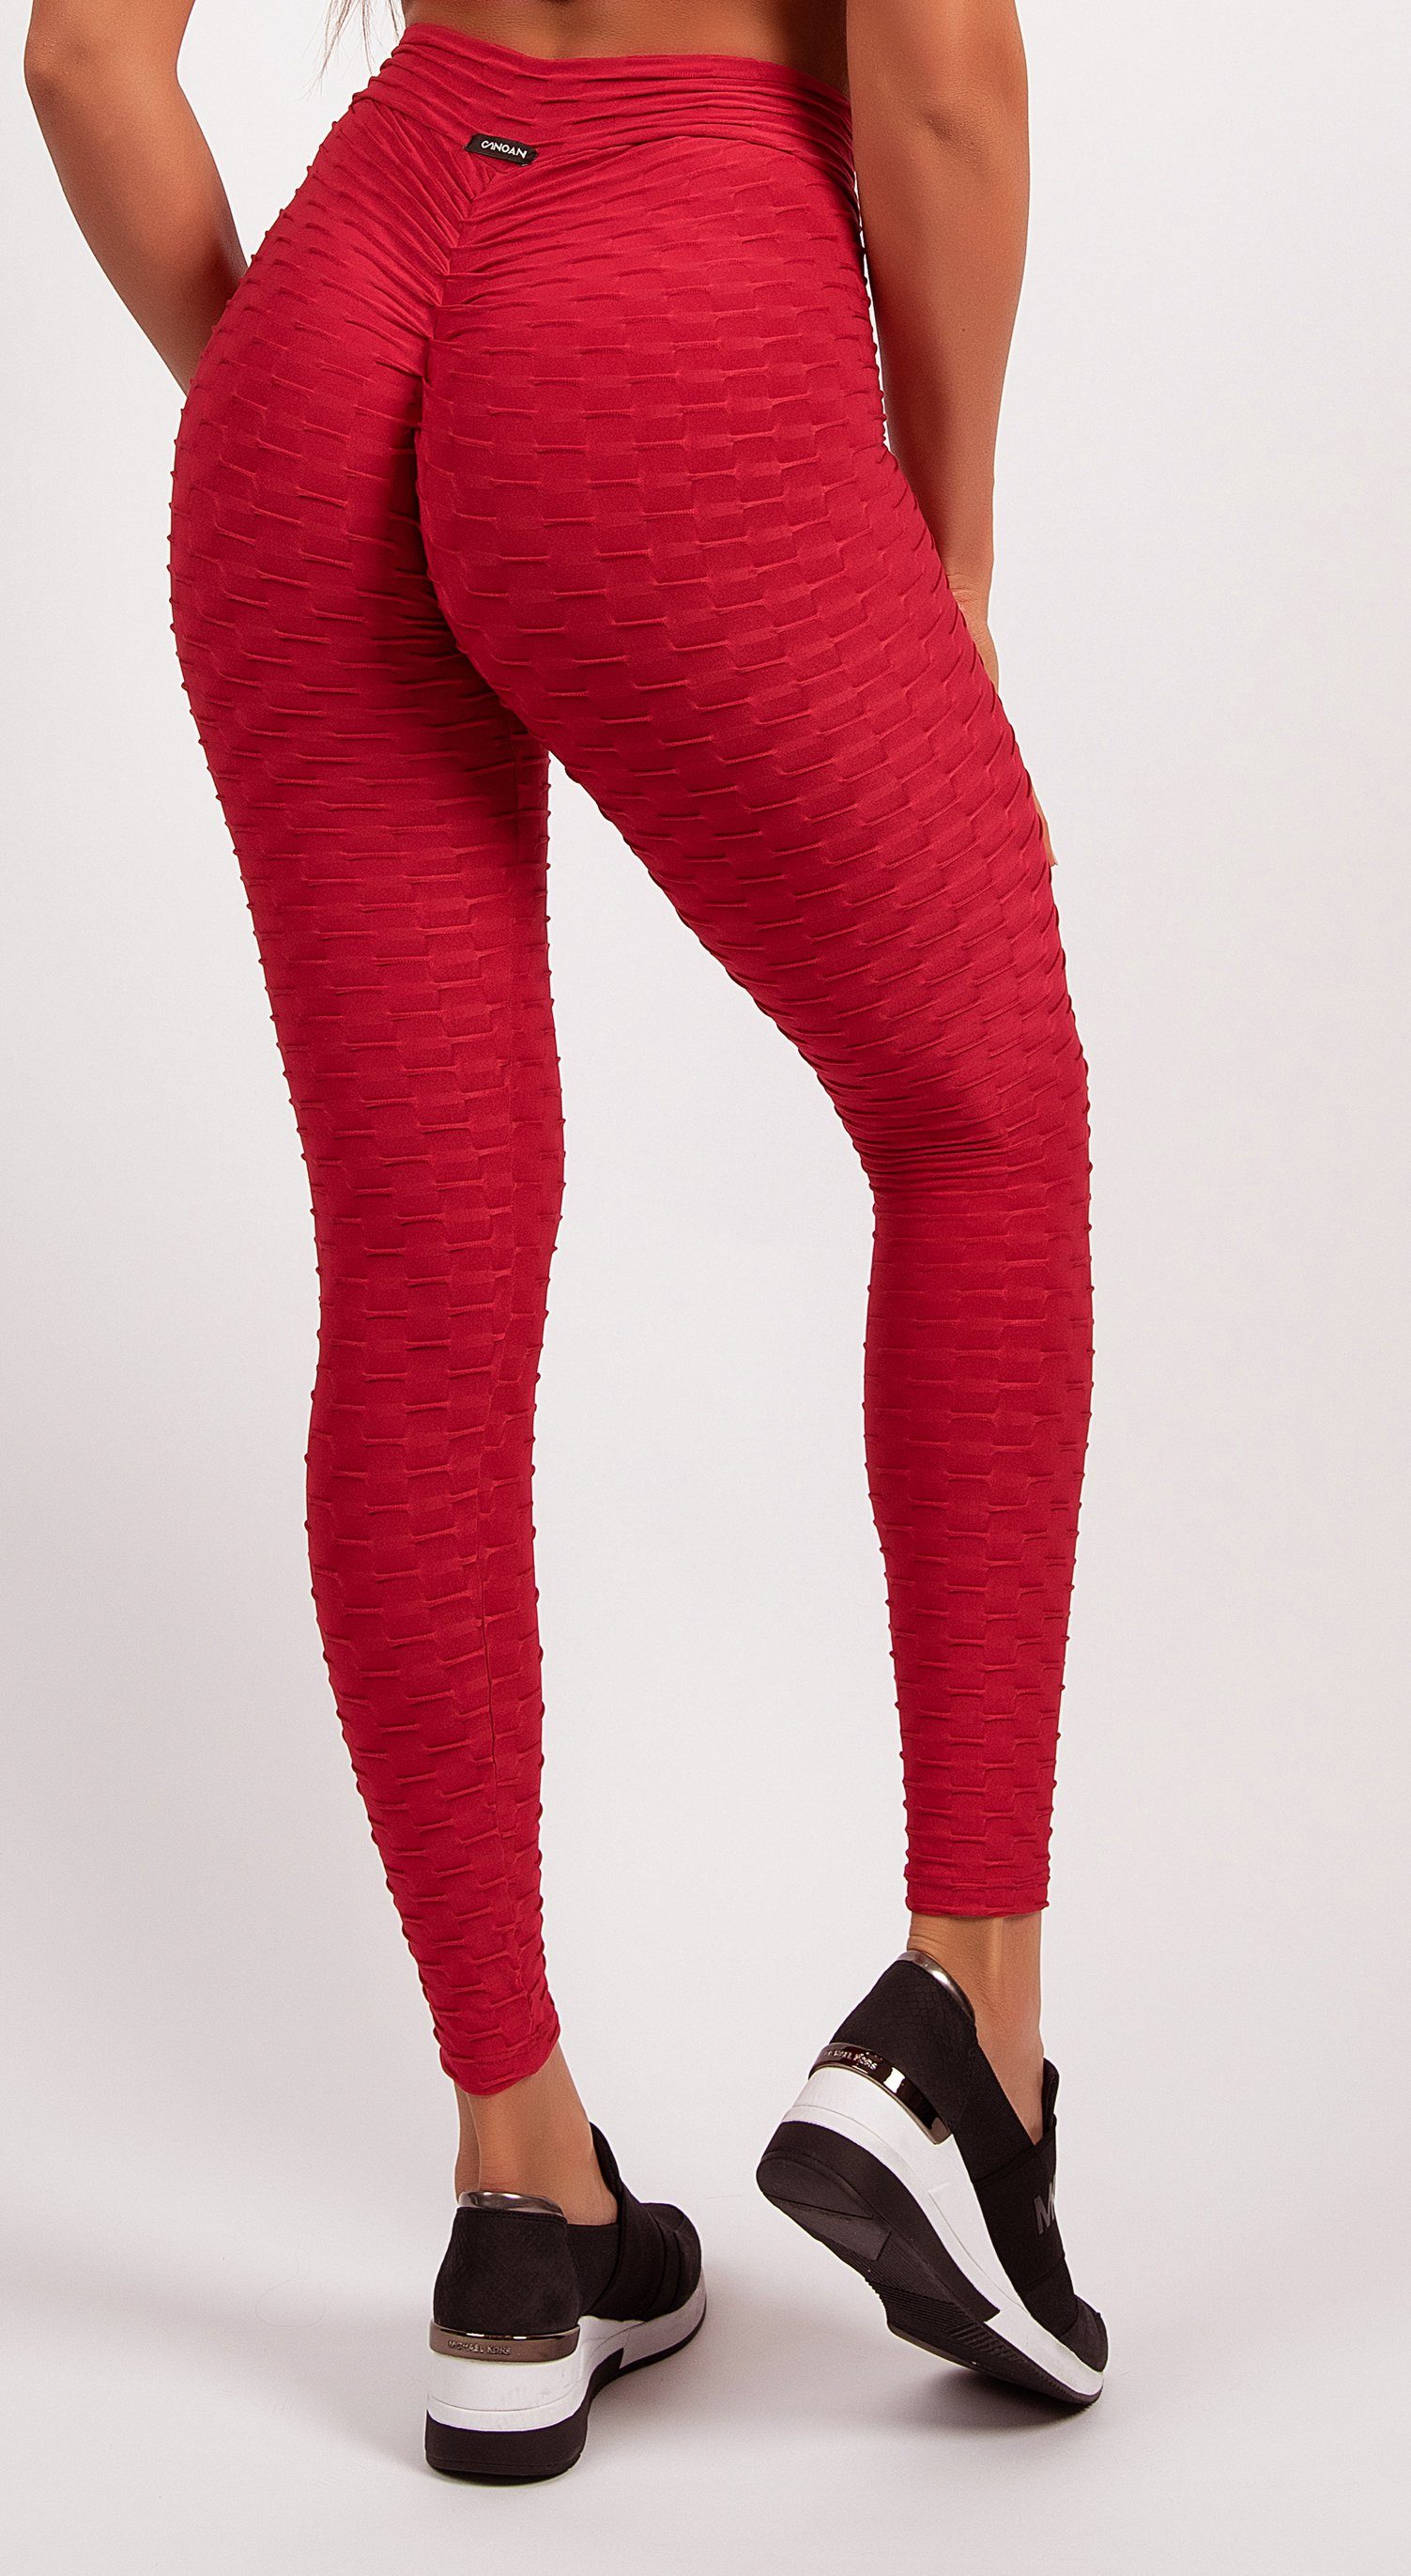 Scrunch booty legging-red.Shop Brazilian scrunch bum gym